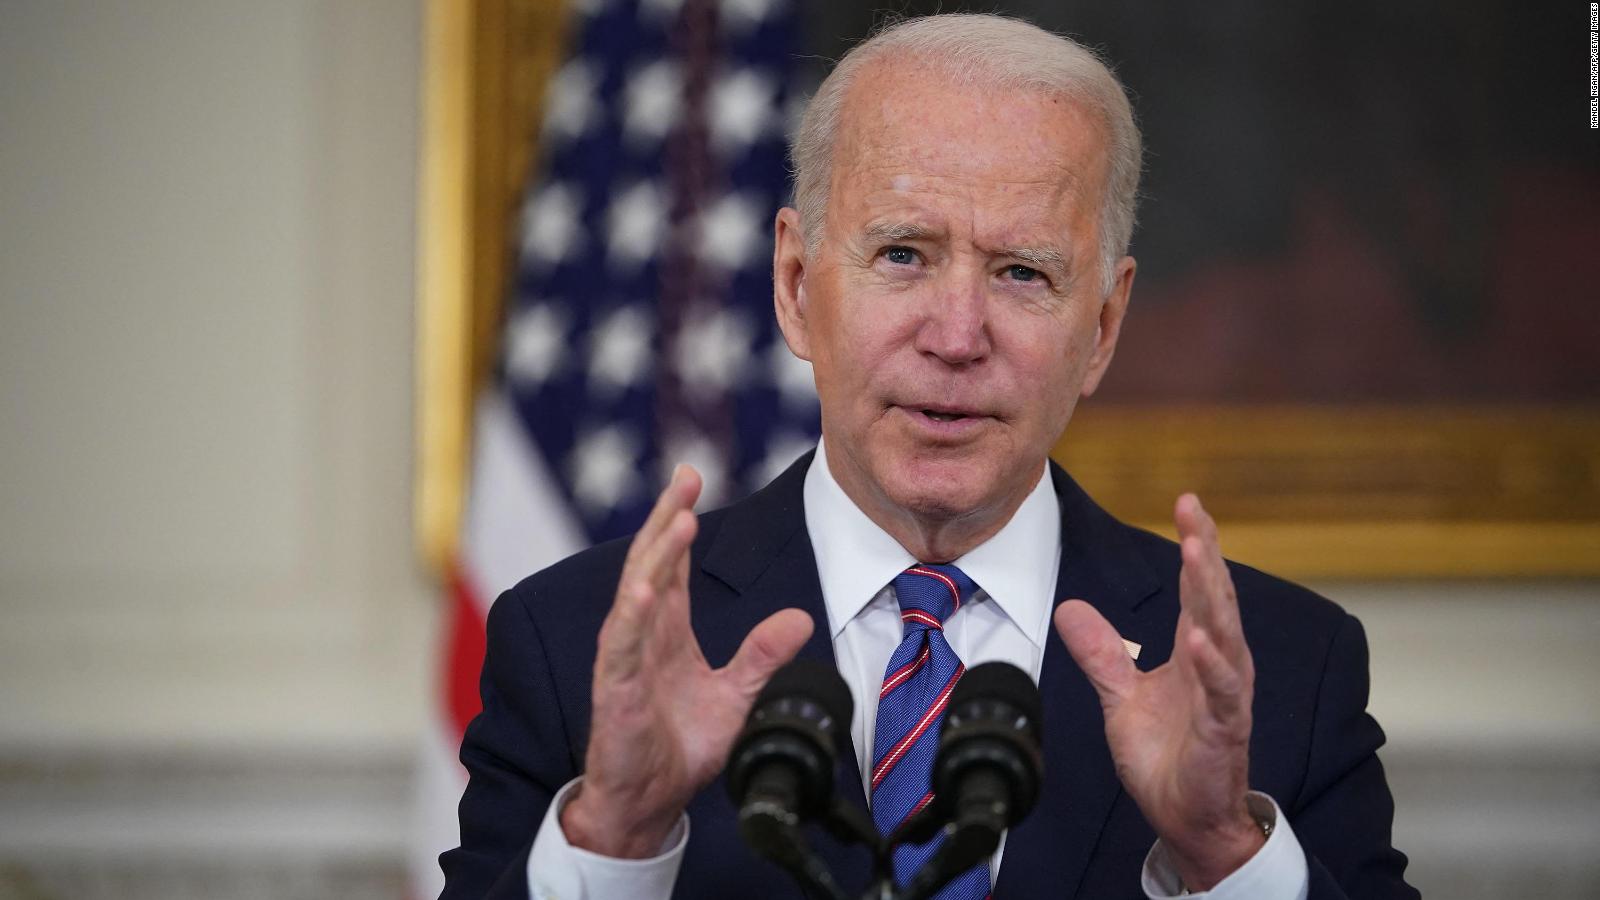 Joe Biden must seek to advance racial justice